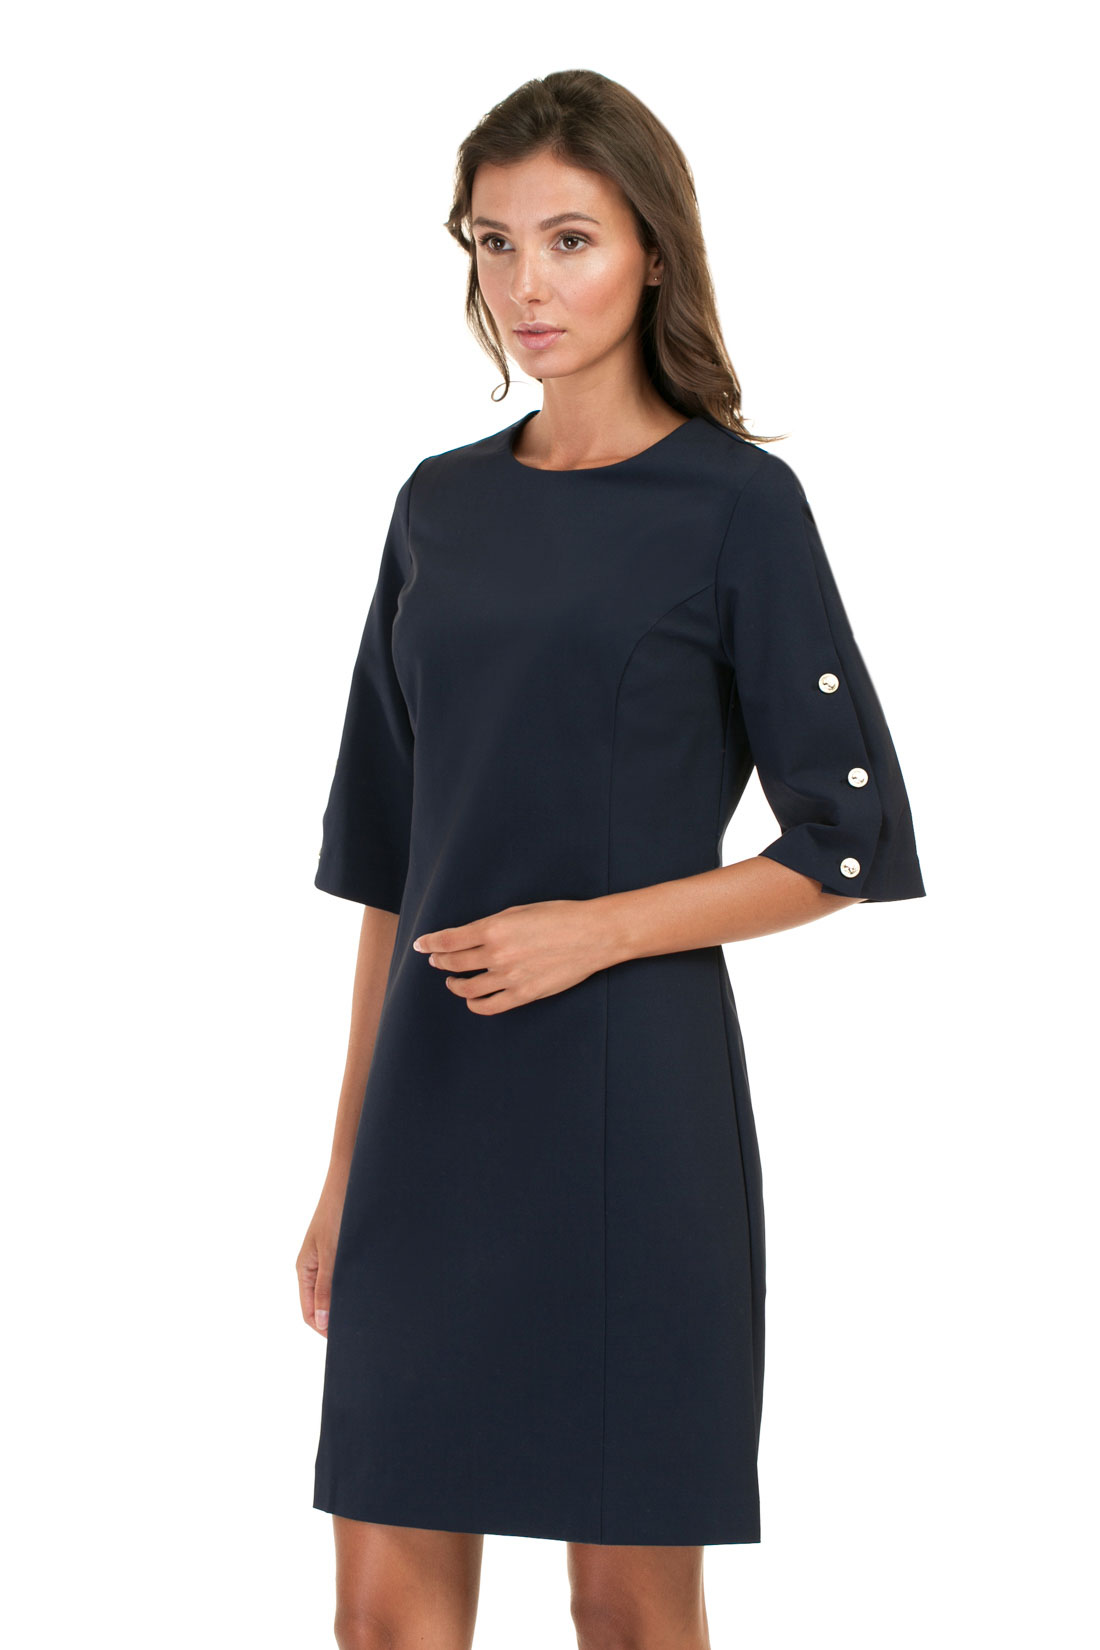 Платье с широкими рукавами (арт. baon B457032), размер XL, цвет синий Платье с широкими рукавами (арт. baon B457032) - фото 5